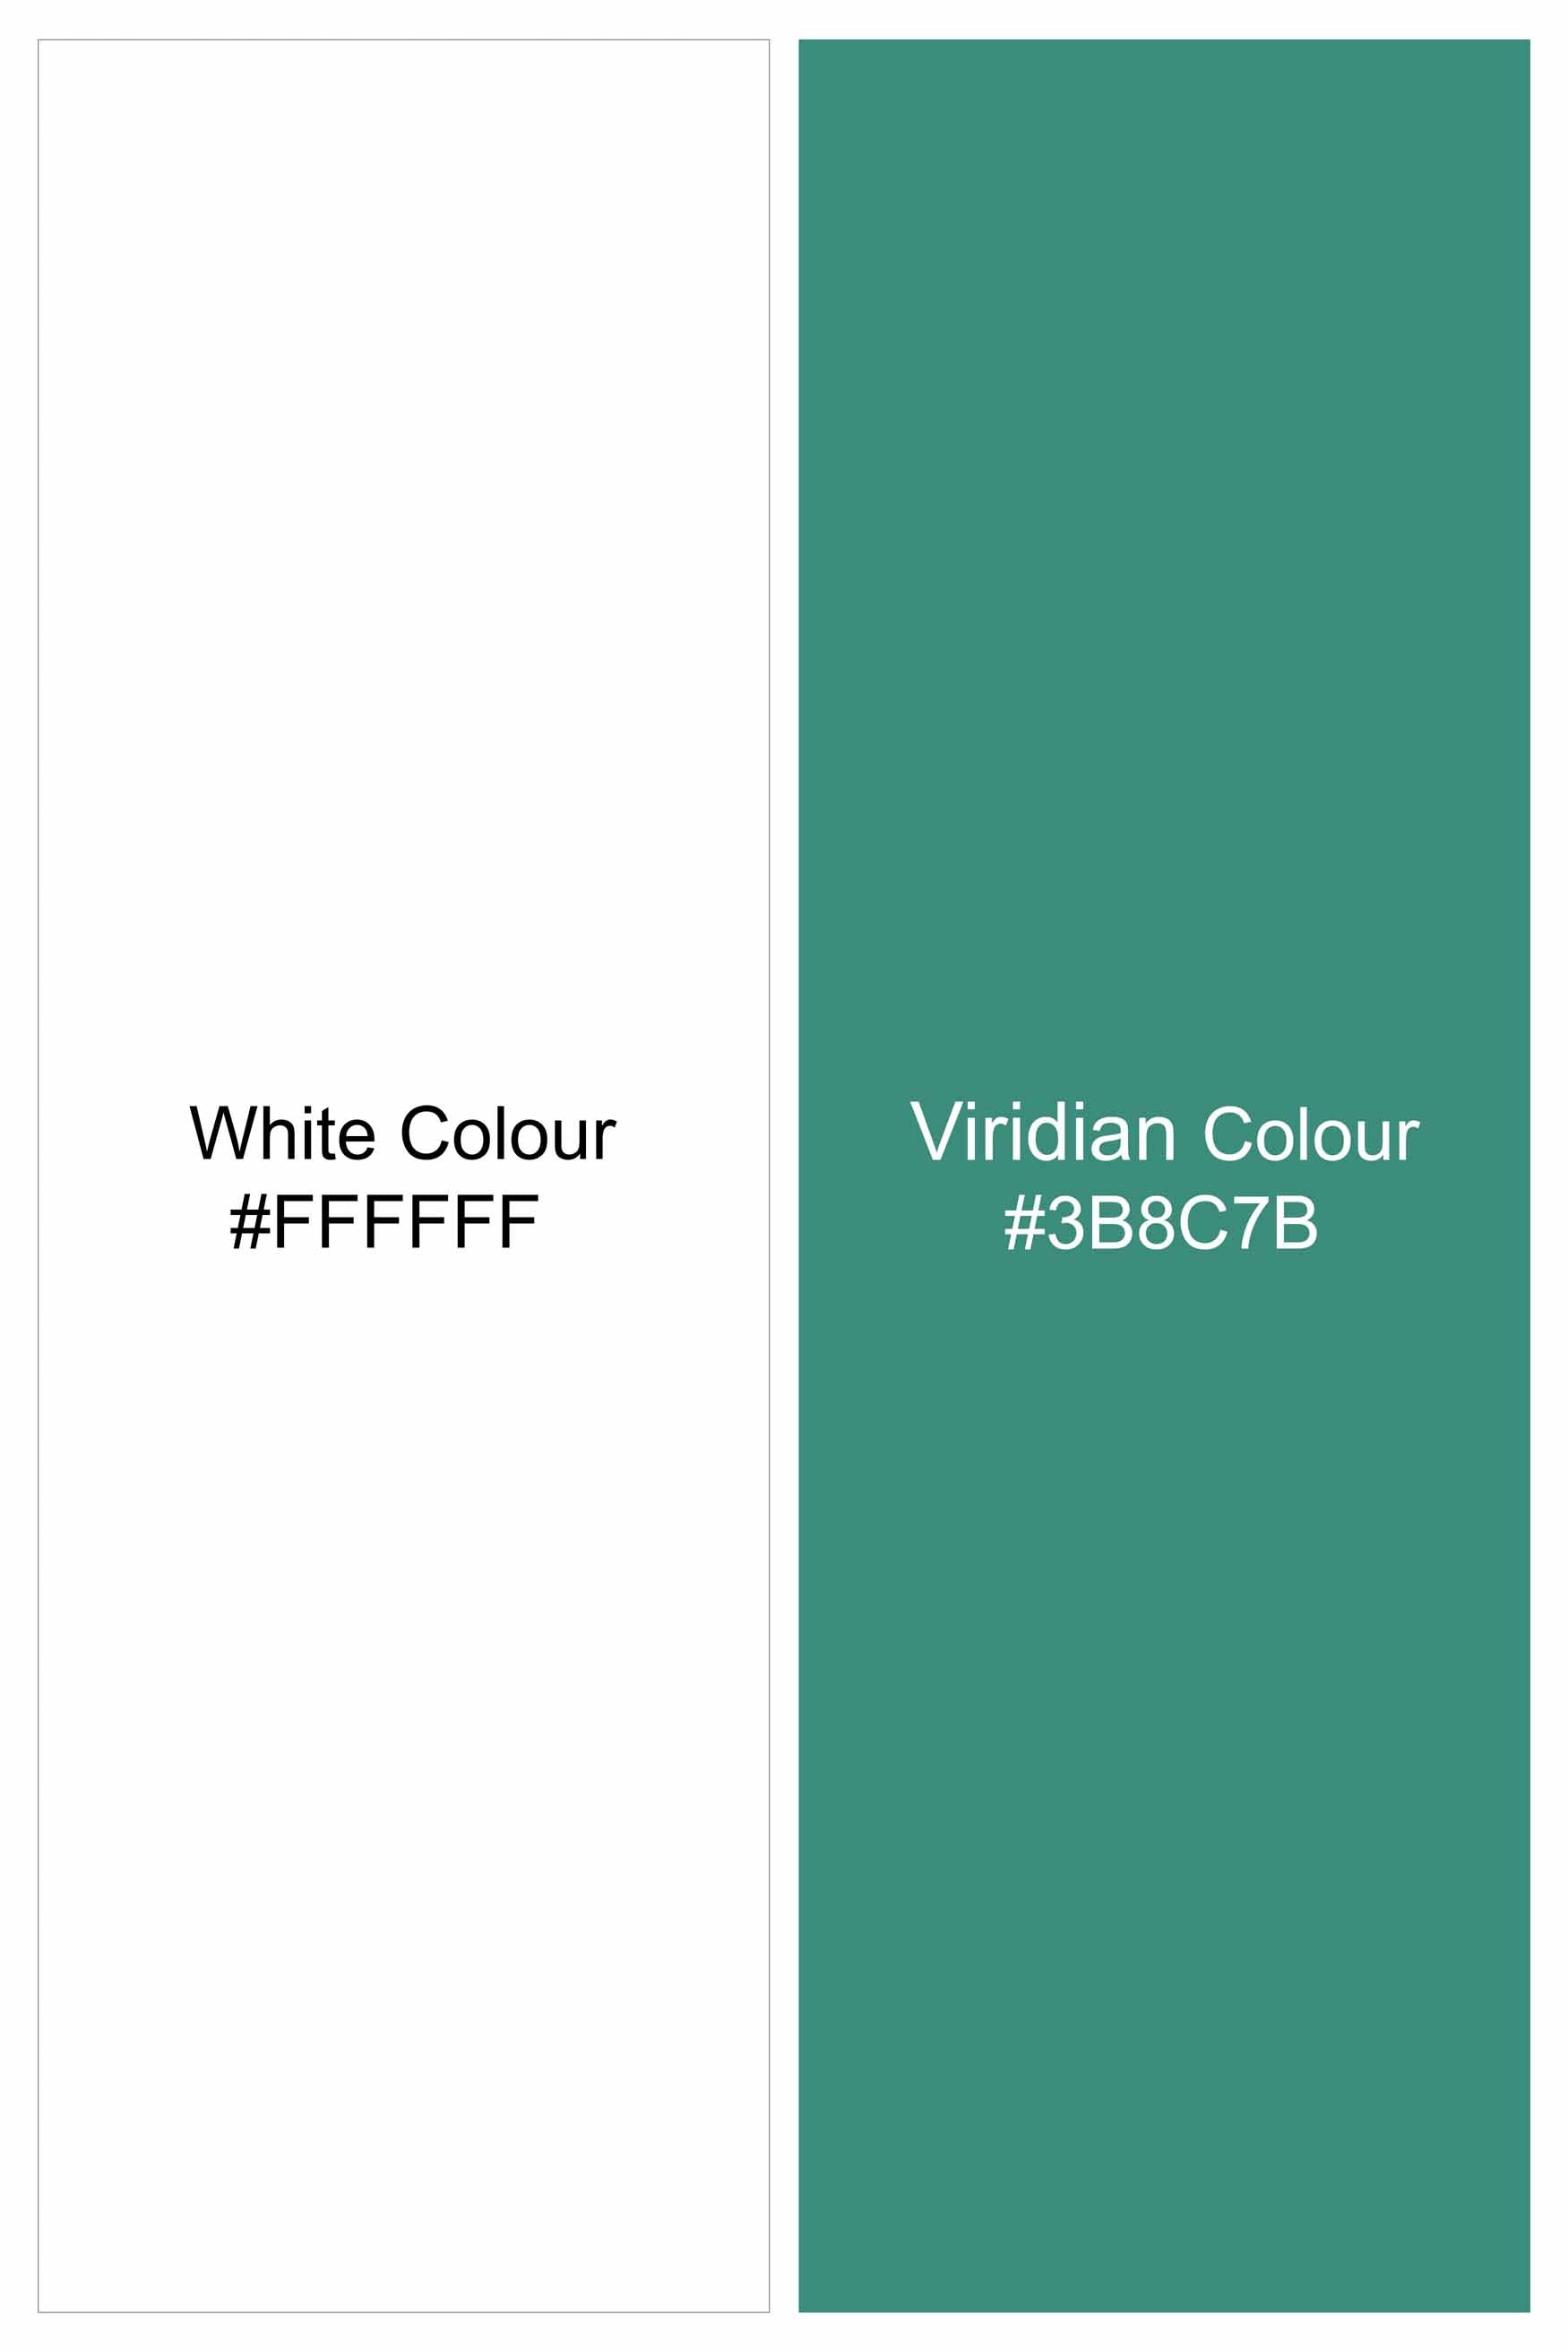 Bright White with Viridian Green Hand Painted Super Soft Premium Cotton Designer Shirt 6382-GR-ART-38, 6382-GR-ART-H-38, 6382-GR-ART-39, 6382-GR-ART-H-39, 6382-GR-ART-40, 6382-GR-ART-H-40, 6382-GR-ART-42, 6382-GR-ART-H-42, 6382-GR-ART-44, 6382-GR-ART-H-44, 6382-GR-ART-46, 6382-GR-ART-H-46, 6382-GR-ART-48, 6382-GR-ART-H-48, 6382-GR-ART-50, 6382-GR-ART-H-50, 6382-GR-ART-52, 6382-GR-ART-H-52